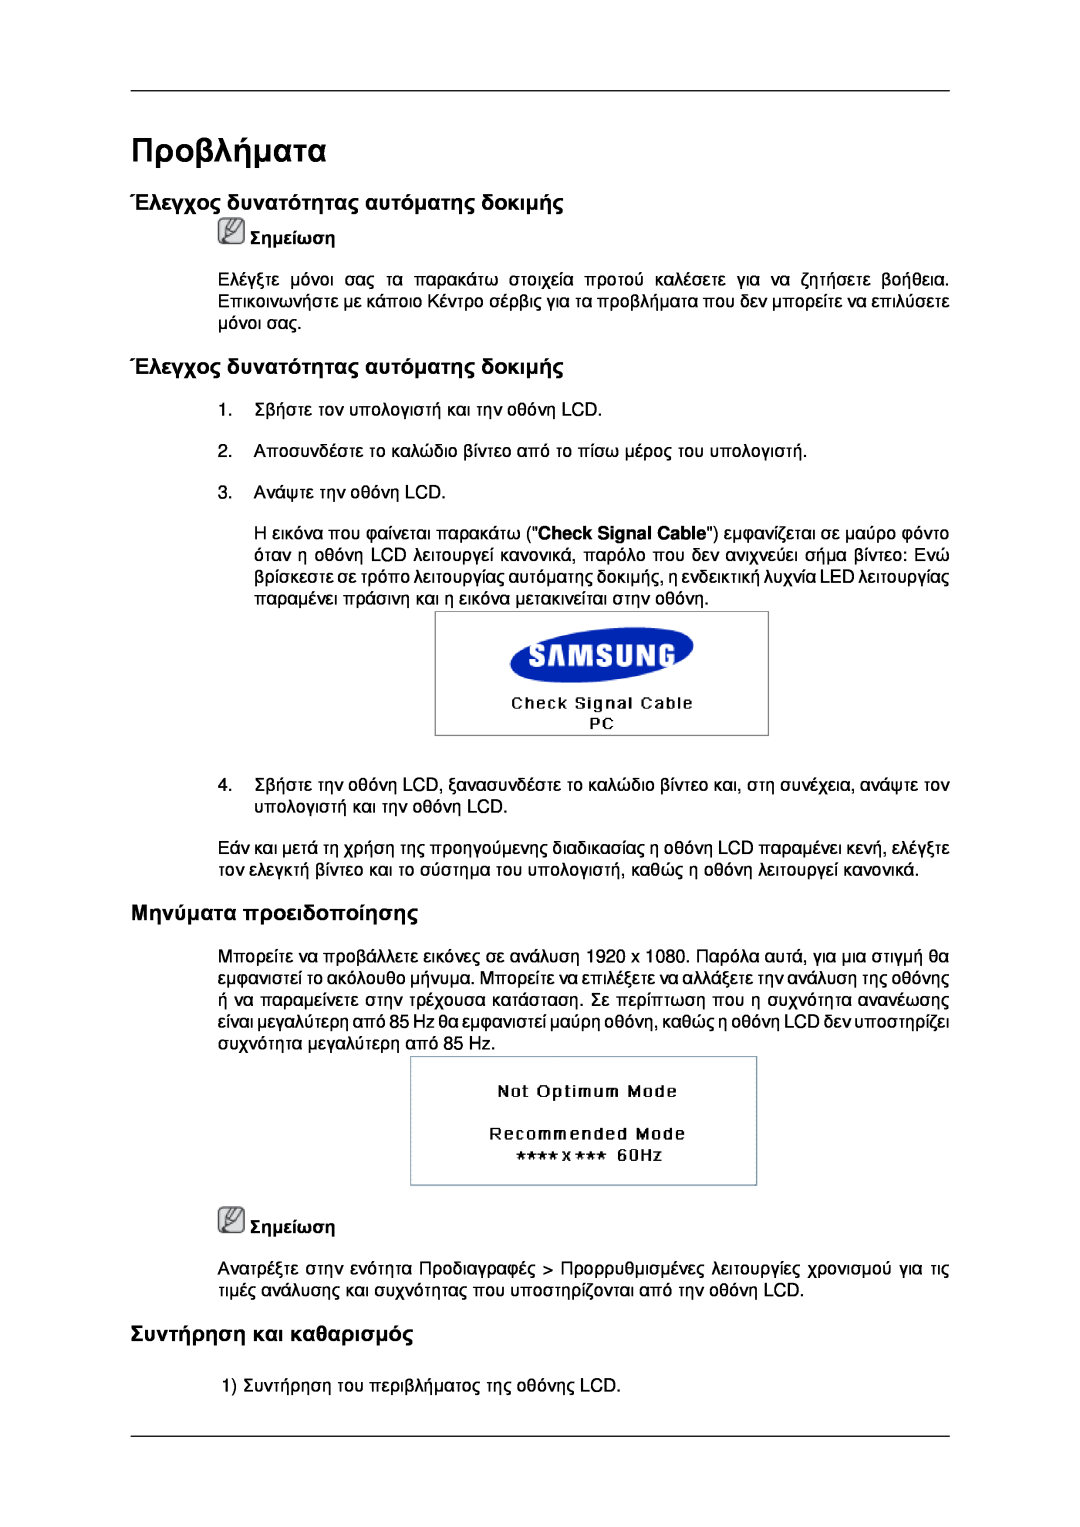 Samsung LH40MRTLBC/EN Προβλήματα, Έλεγχος δυνατότητας αυτόματης δοκιμής, Μηνύματα προειδοποίησης, Συντήρηση και καθαρισμός 